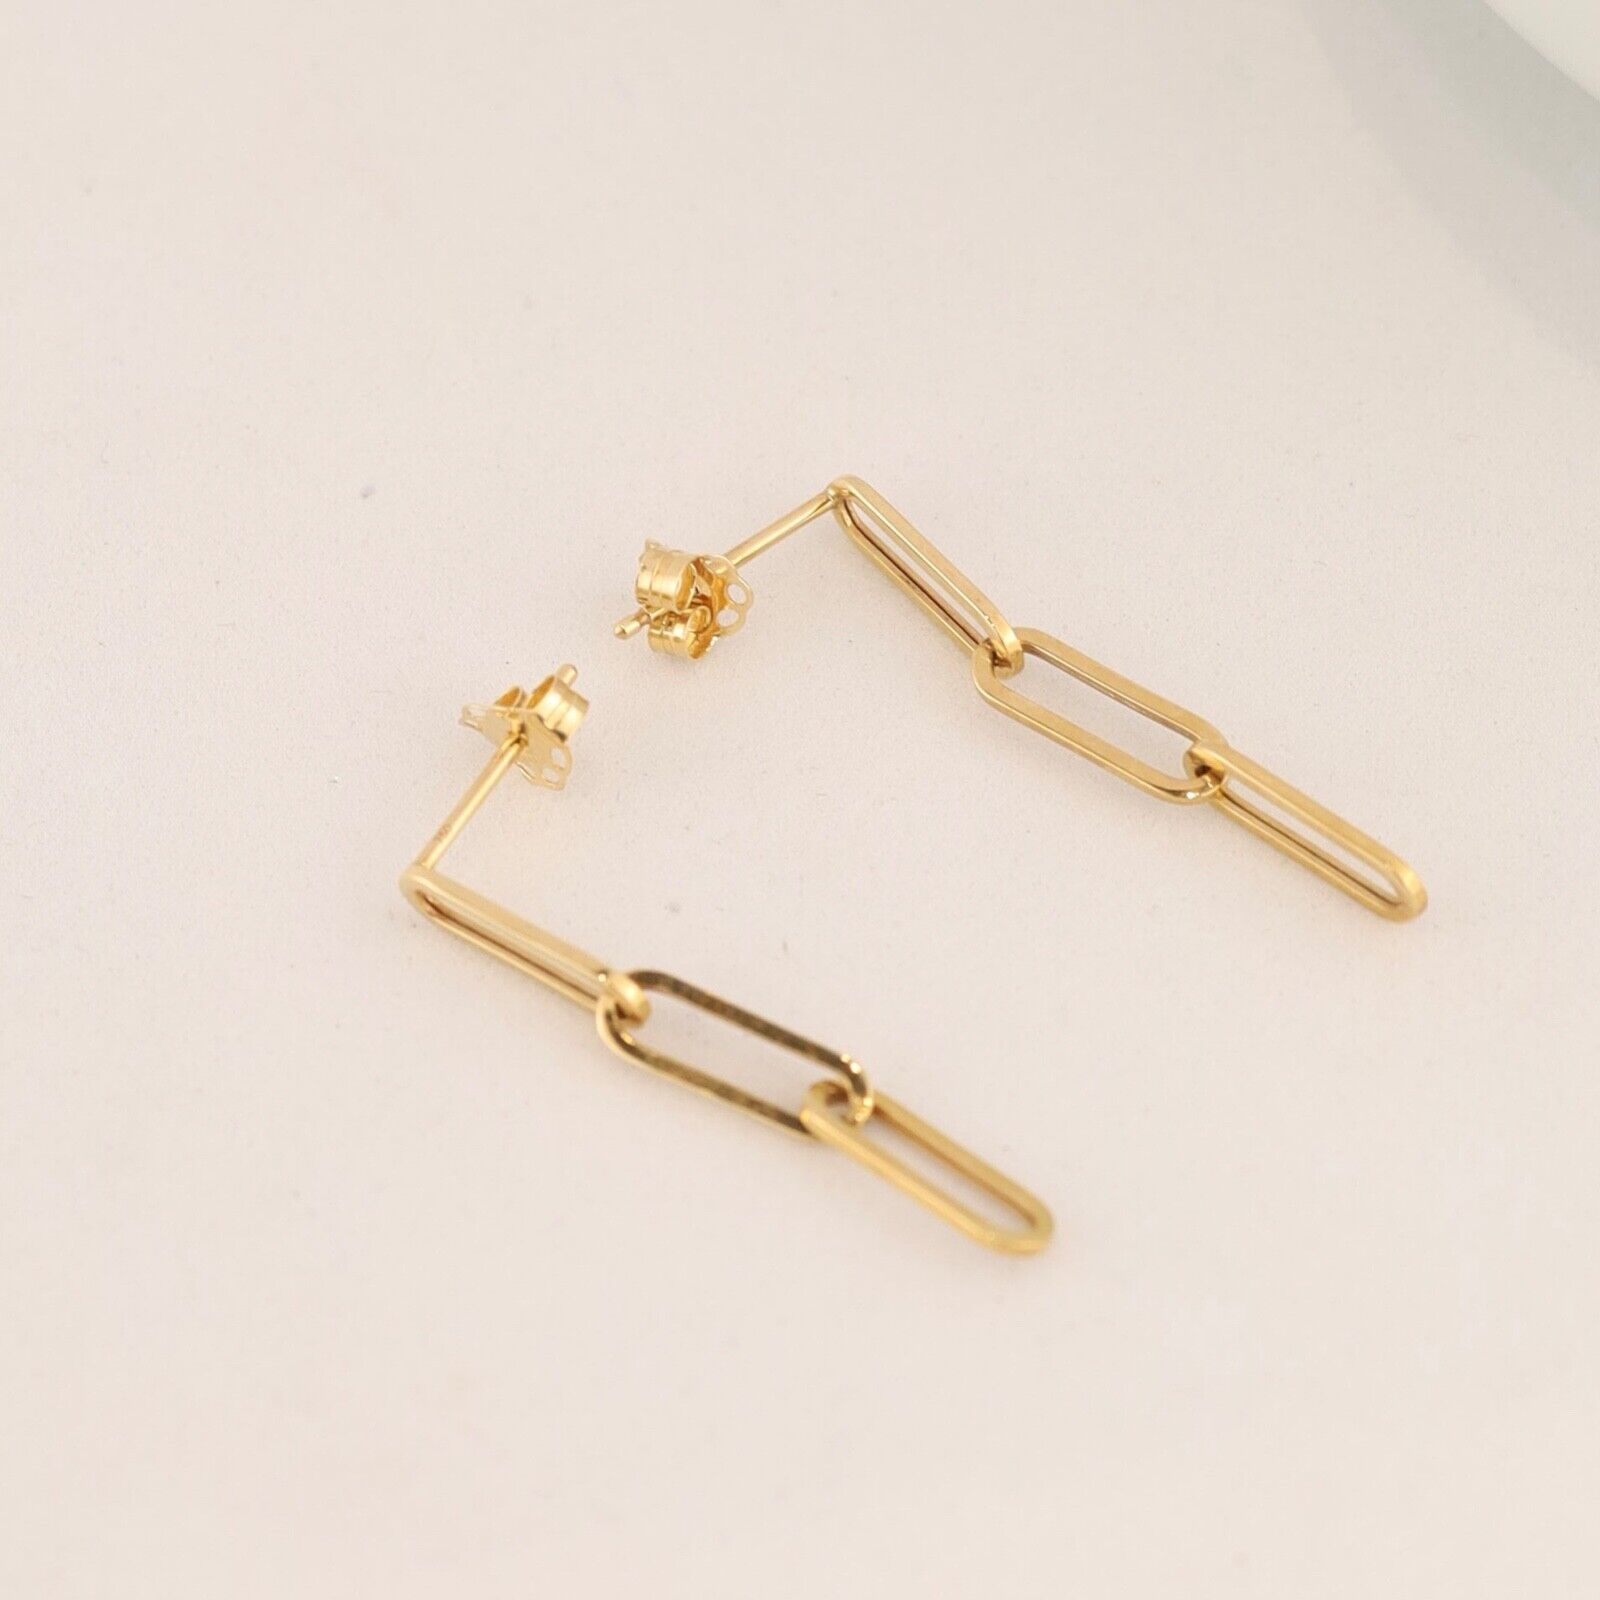 Linked Chain Earrings 18k Yellow Gold E789 sep